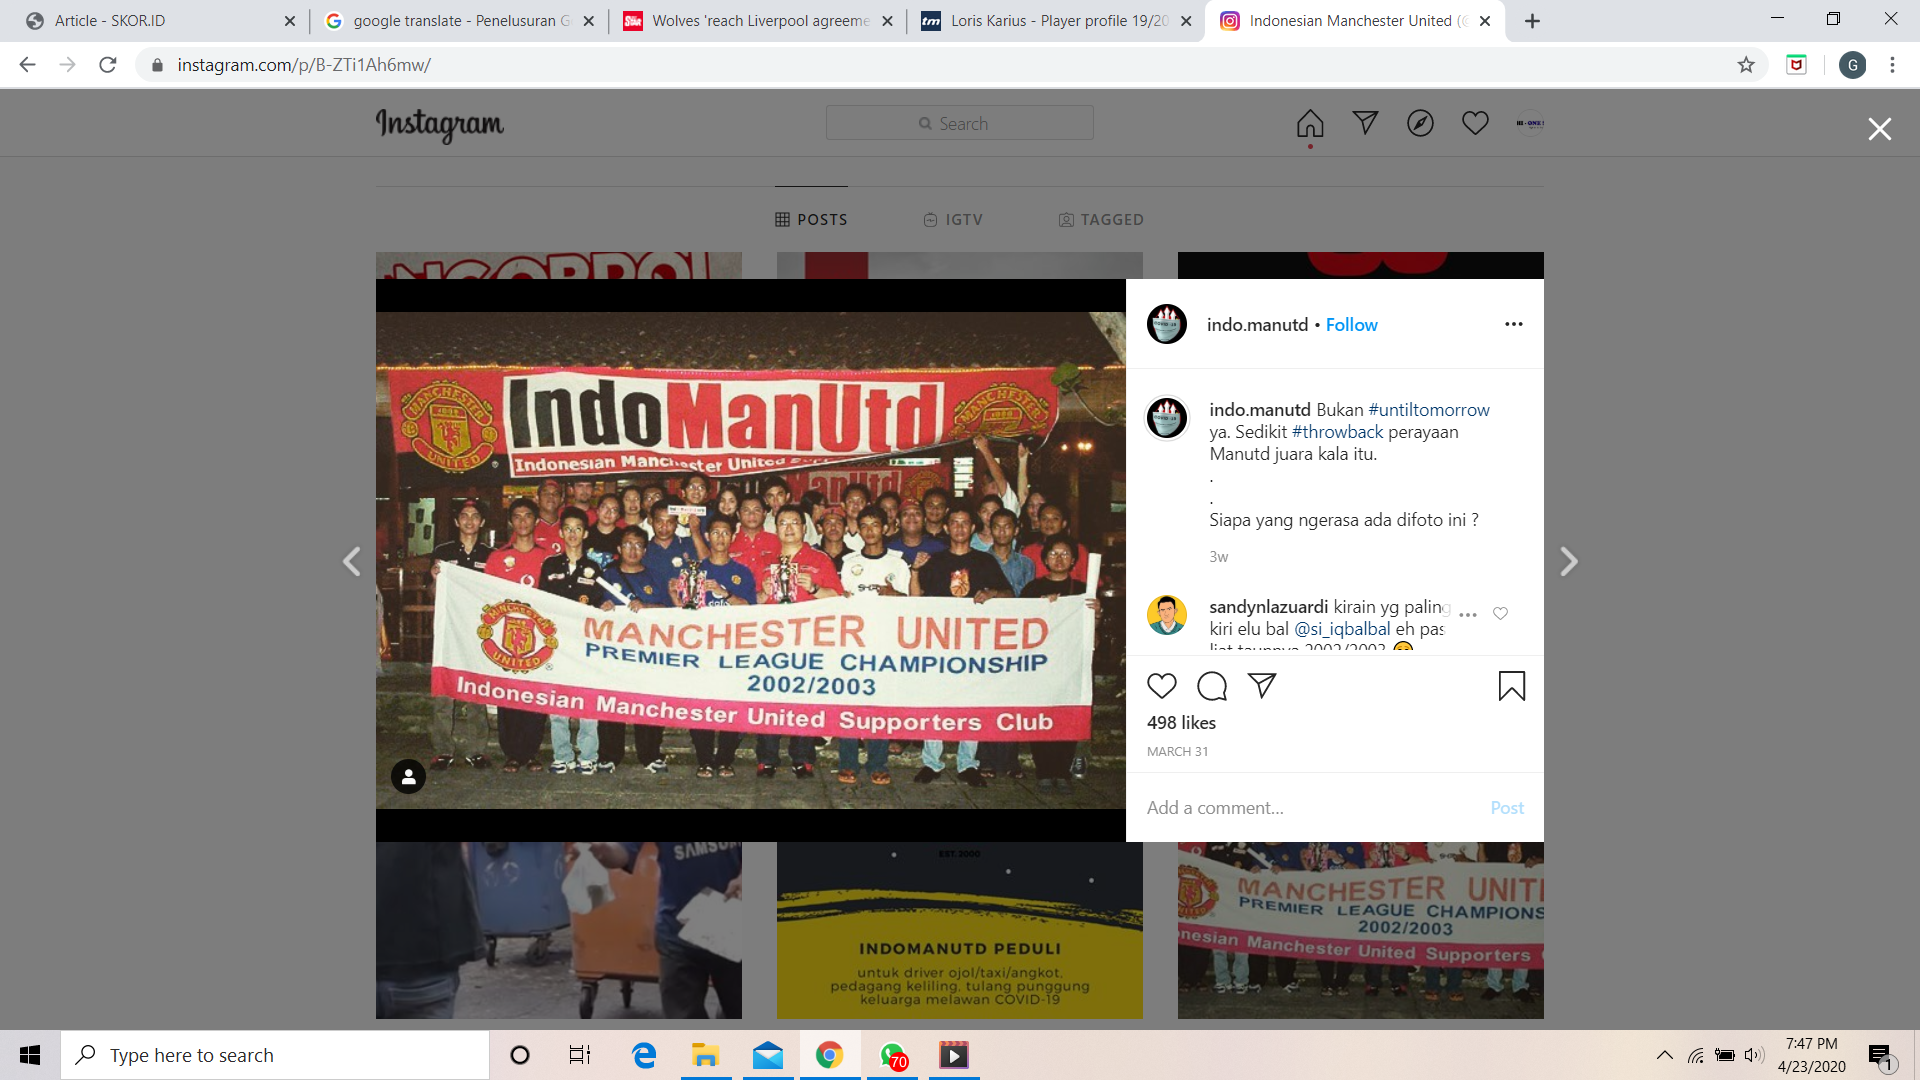 Ini Kegiatan Indonesia Manchester United selama Pandemi Covid-19